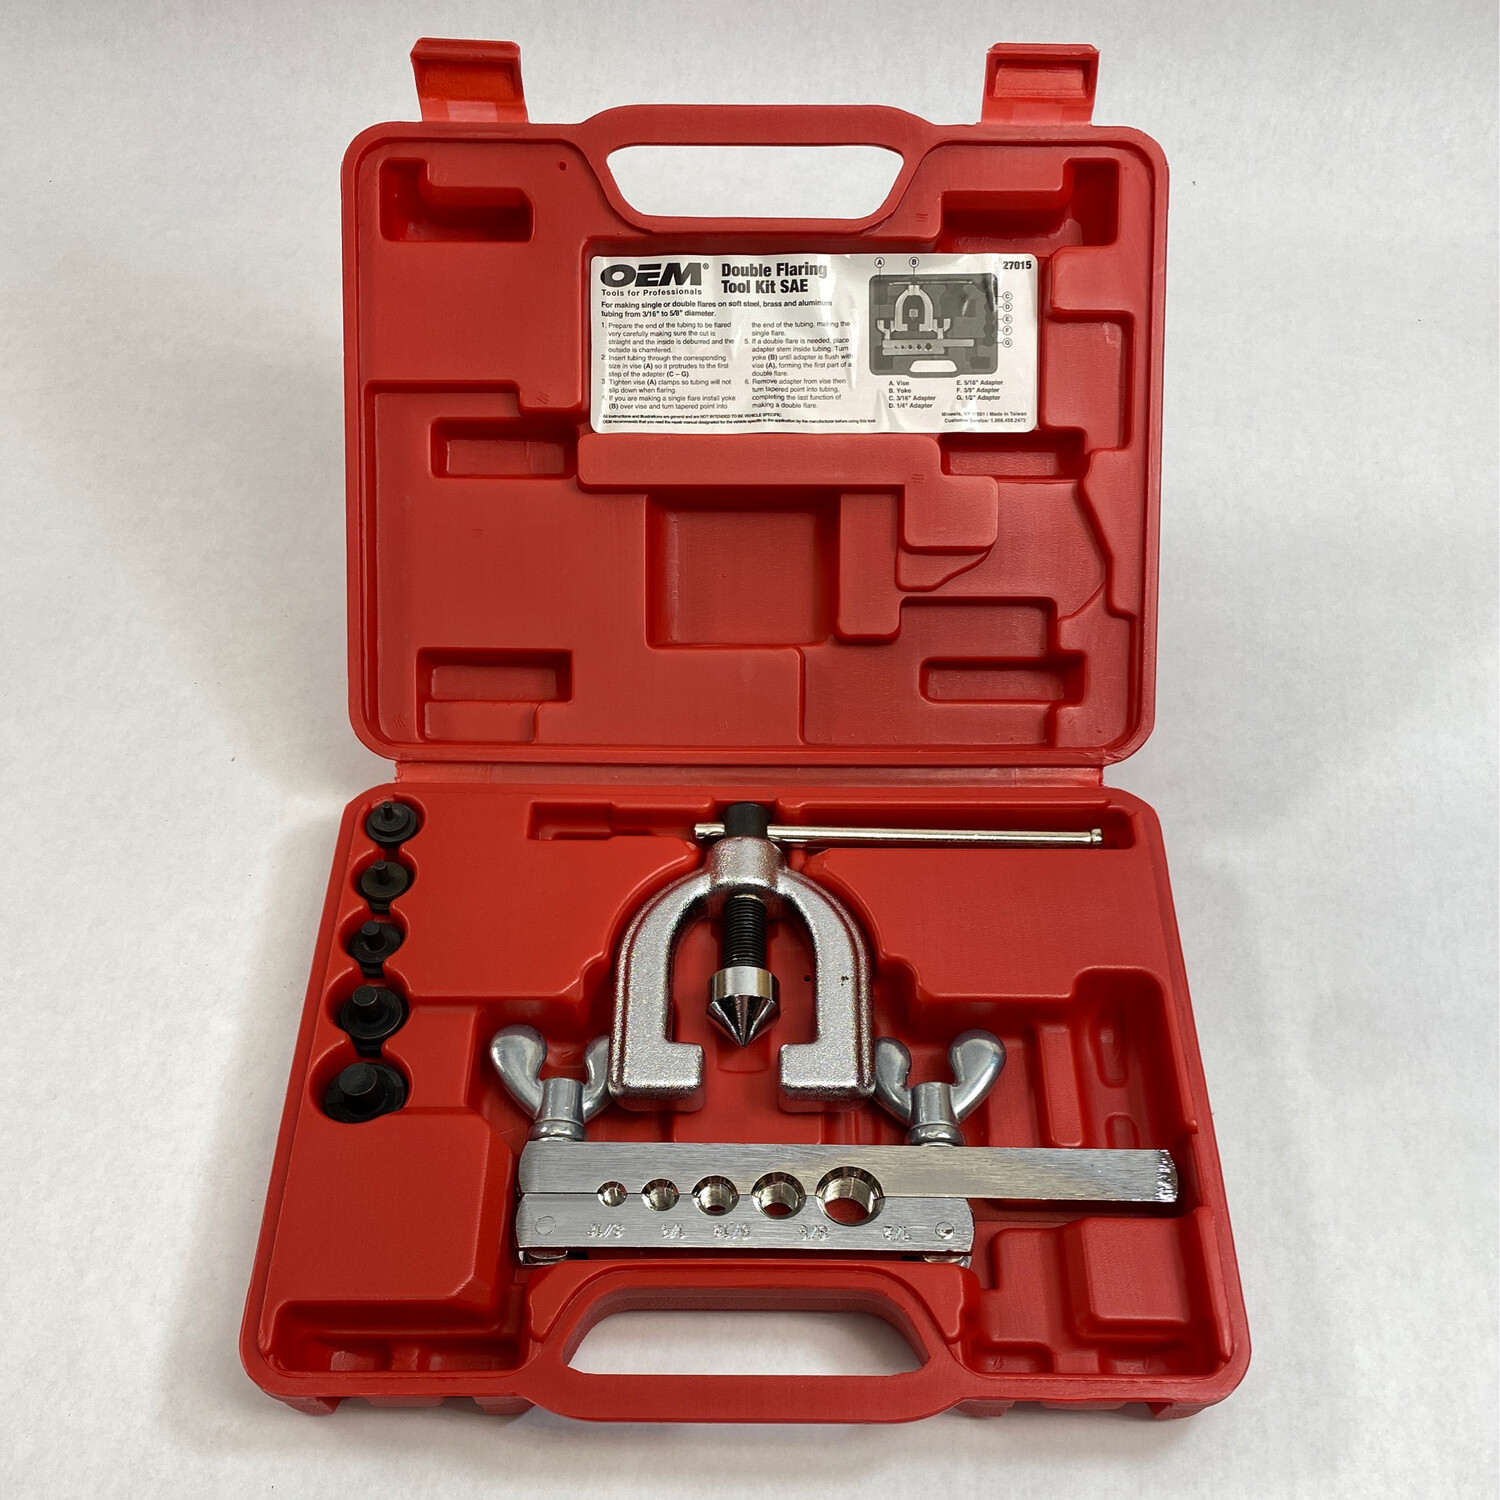 OEM Tools Double Flaring Tool Kit SAE, 27015